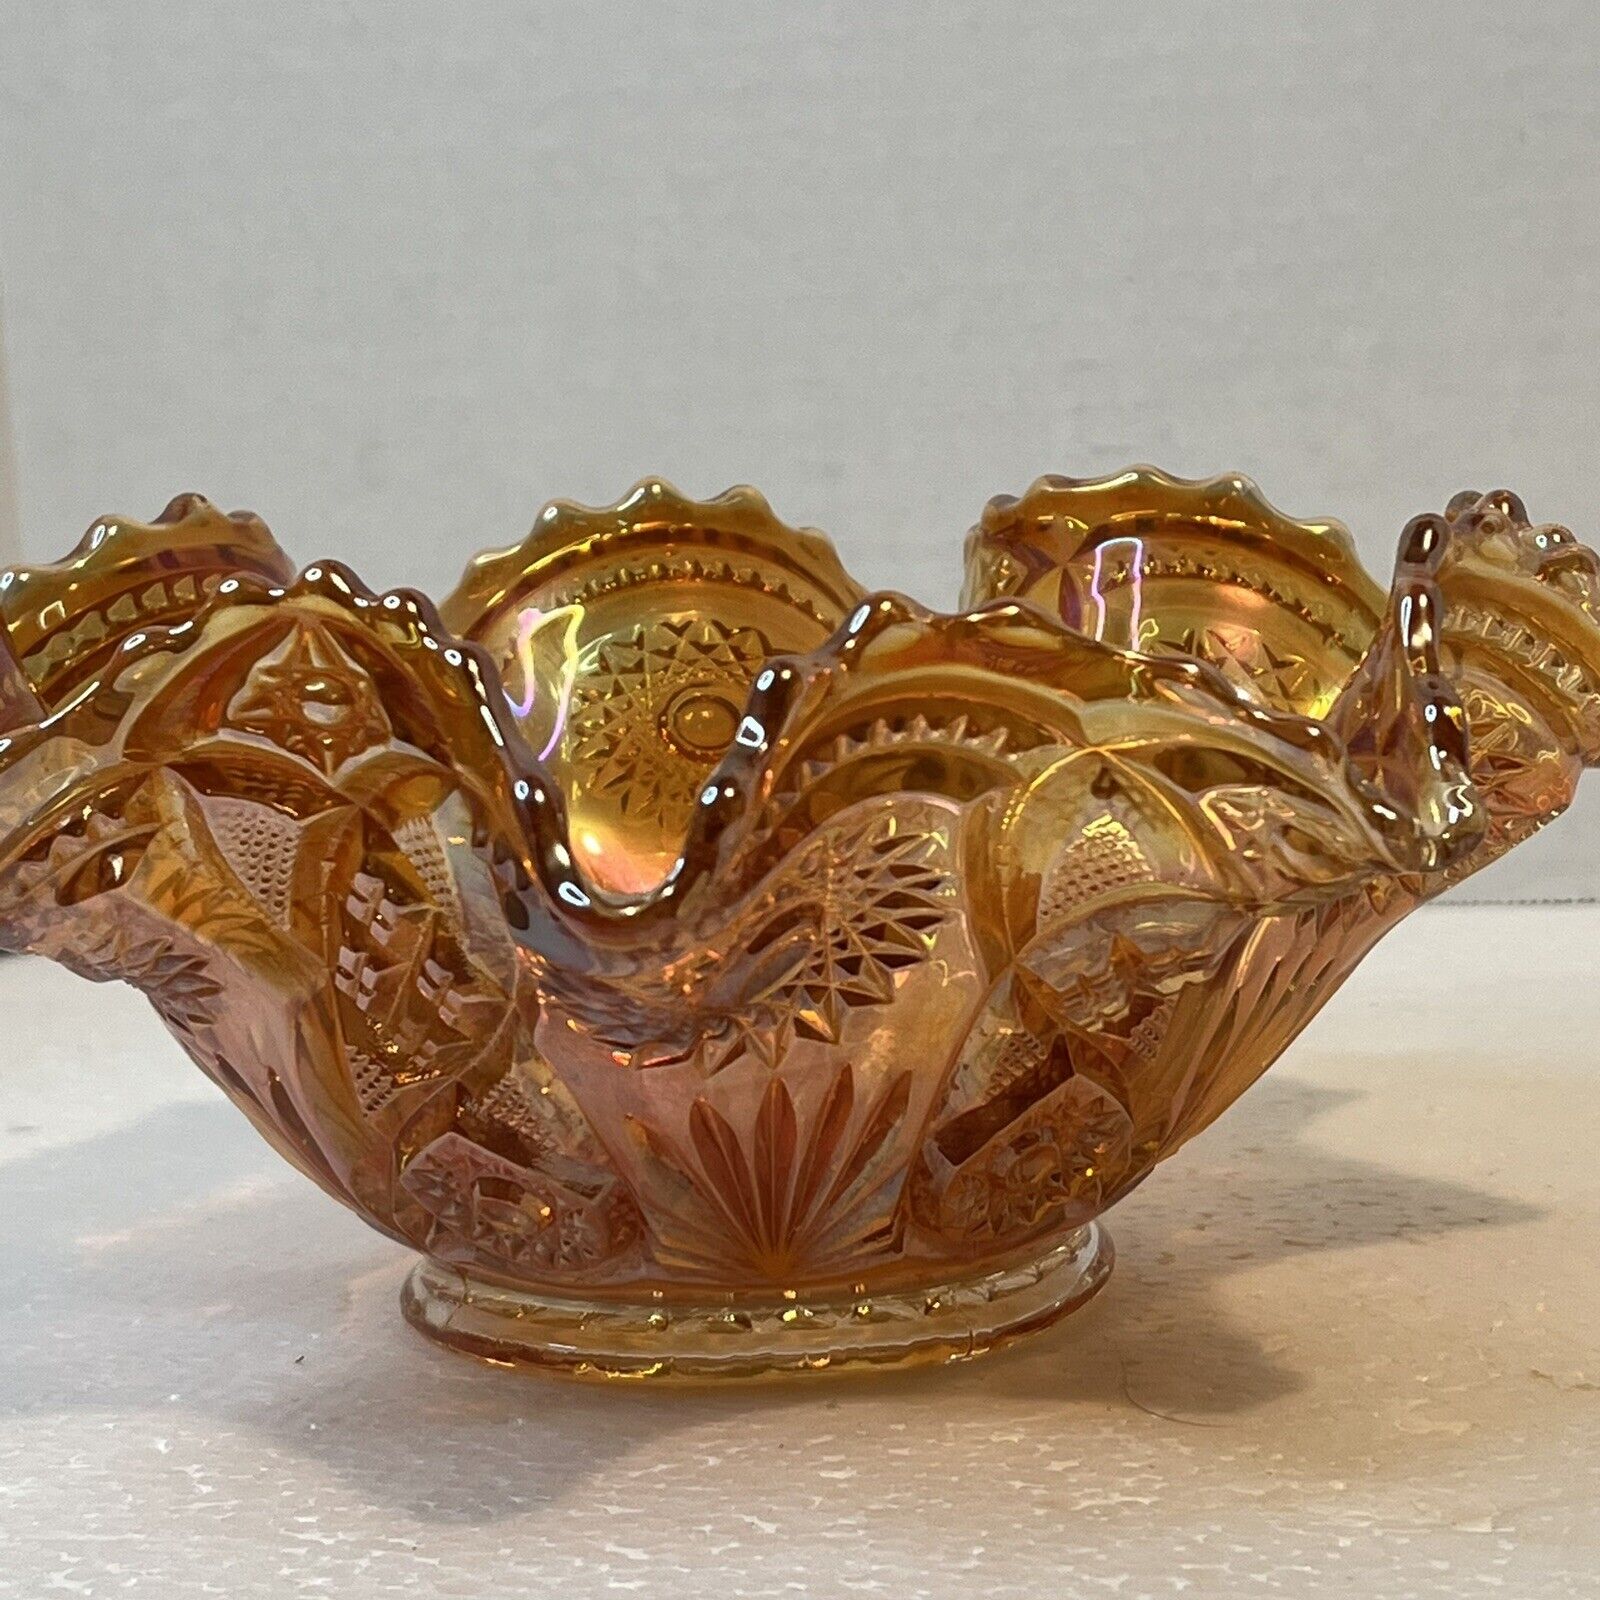 Fenton Ruffled Edge Bowl Art Carnival Glass Marigold ‘Hobstar & Flowers’ Vintage